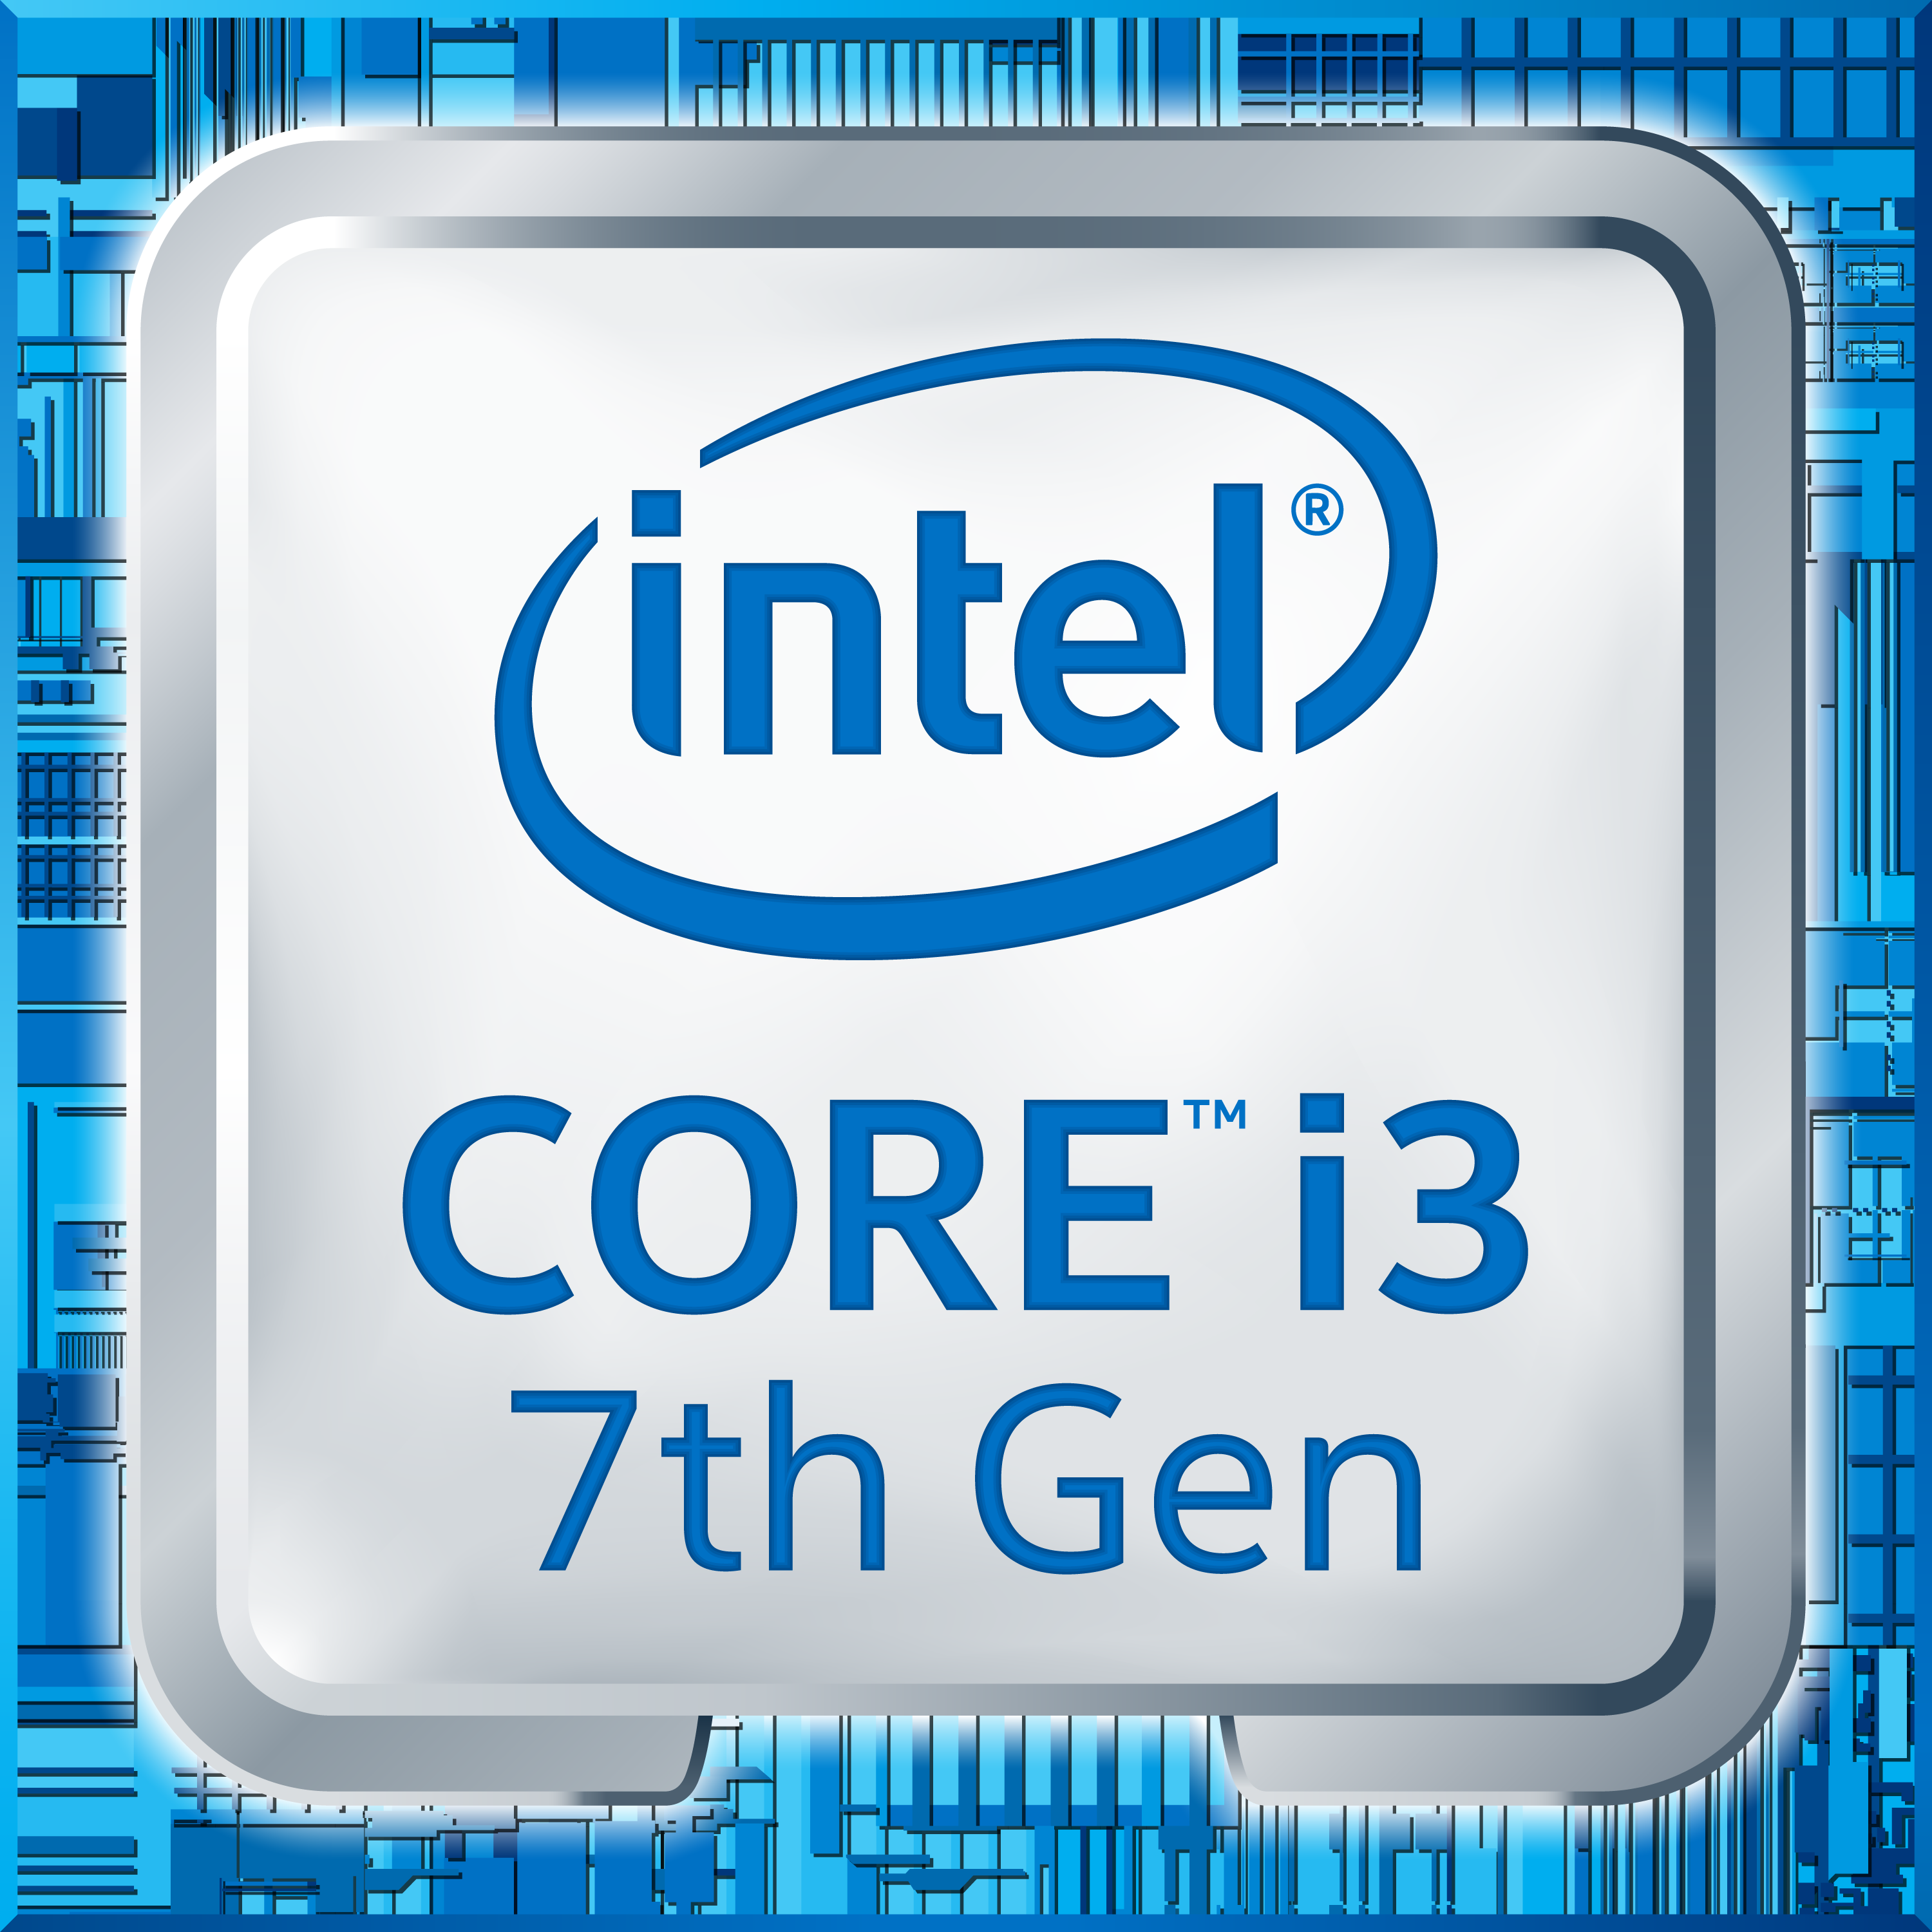 Core i3 badge